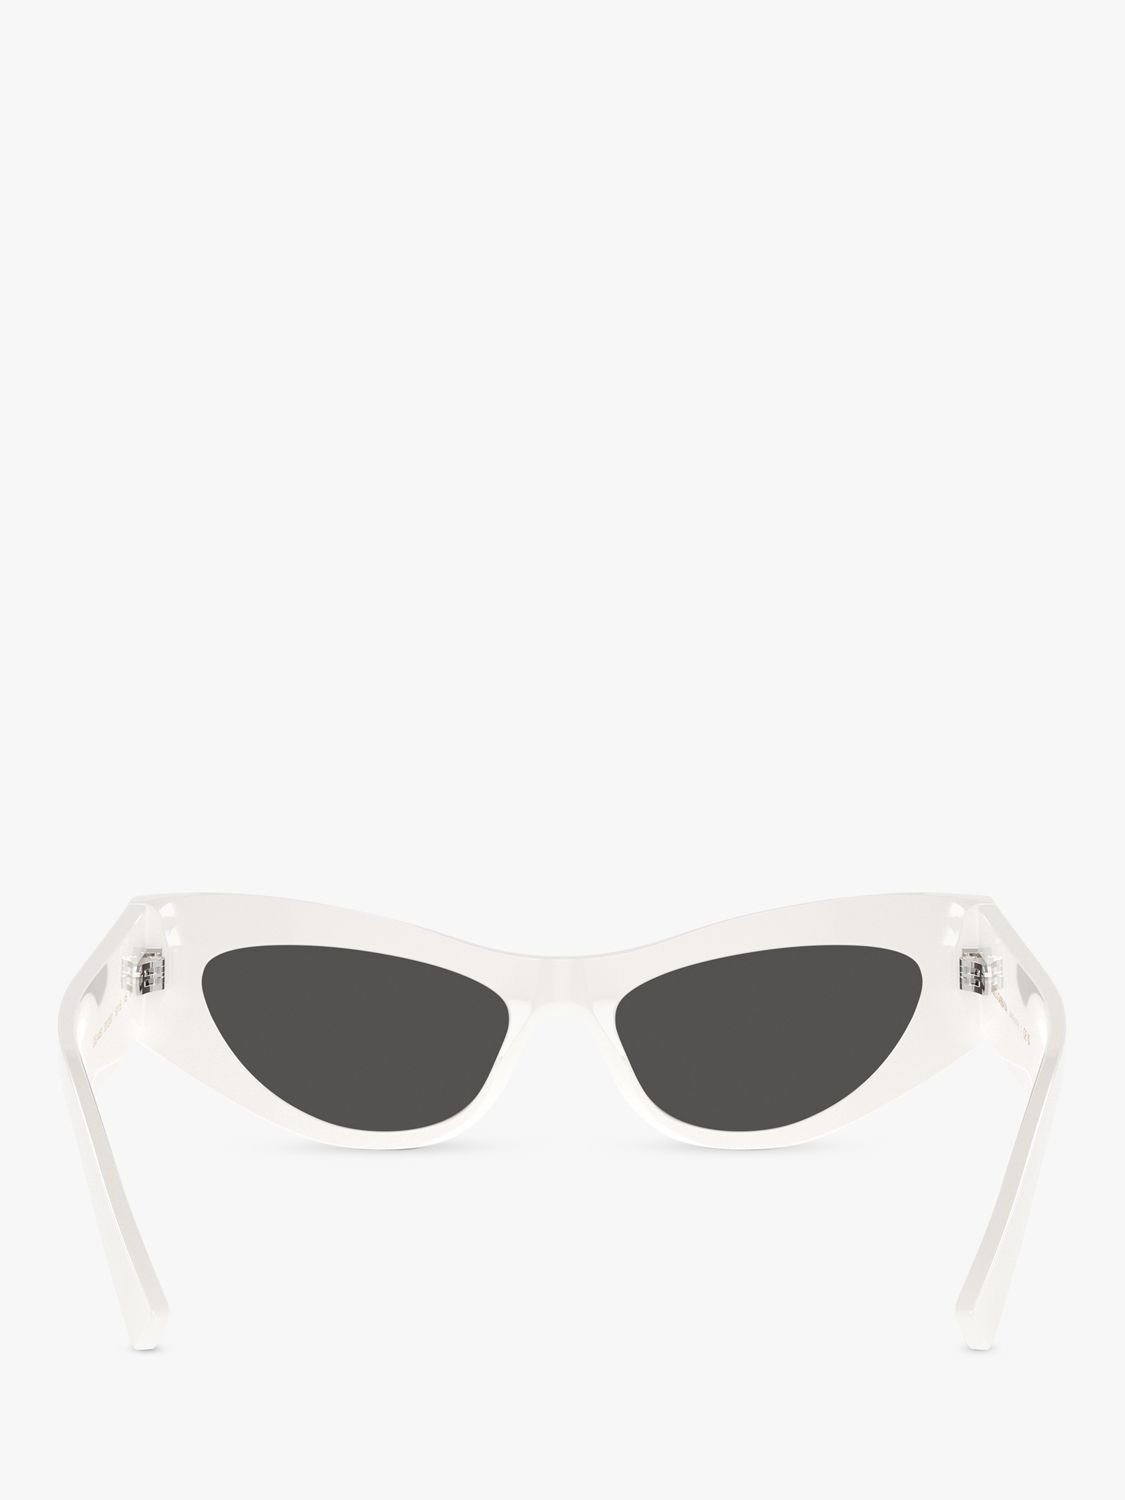 Dolce & Gabbana DG4450 Women's Cat's Eye Sunglasses, White/Grey